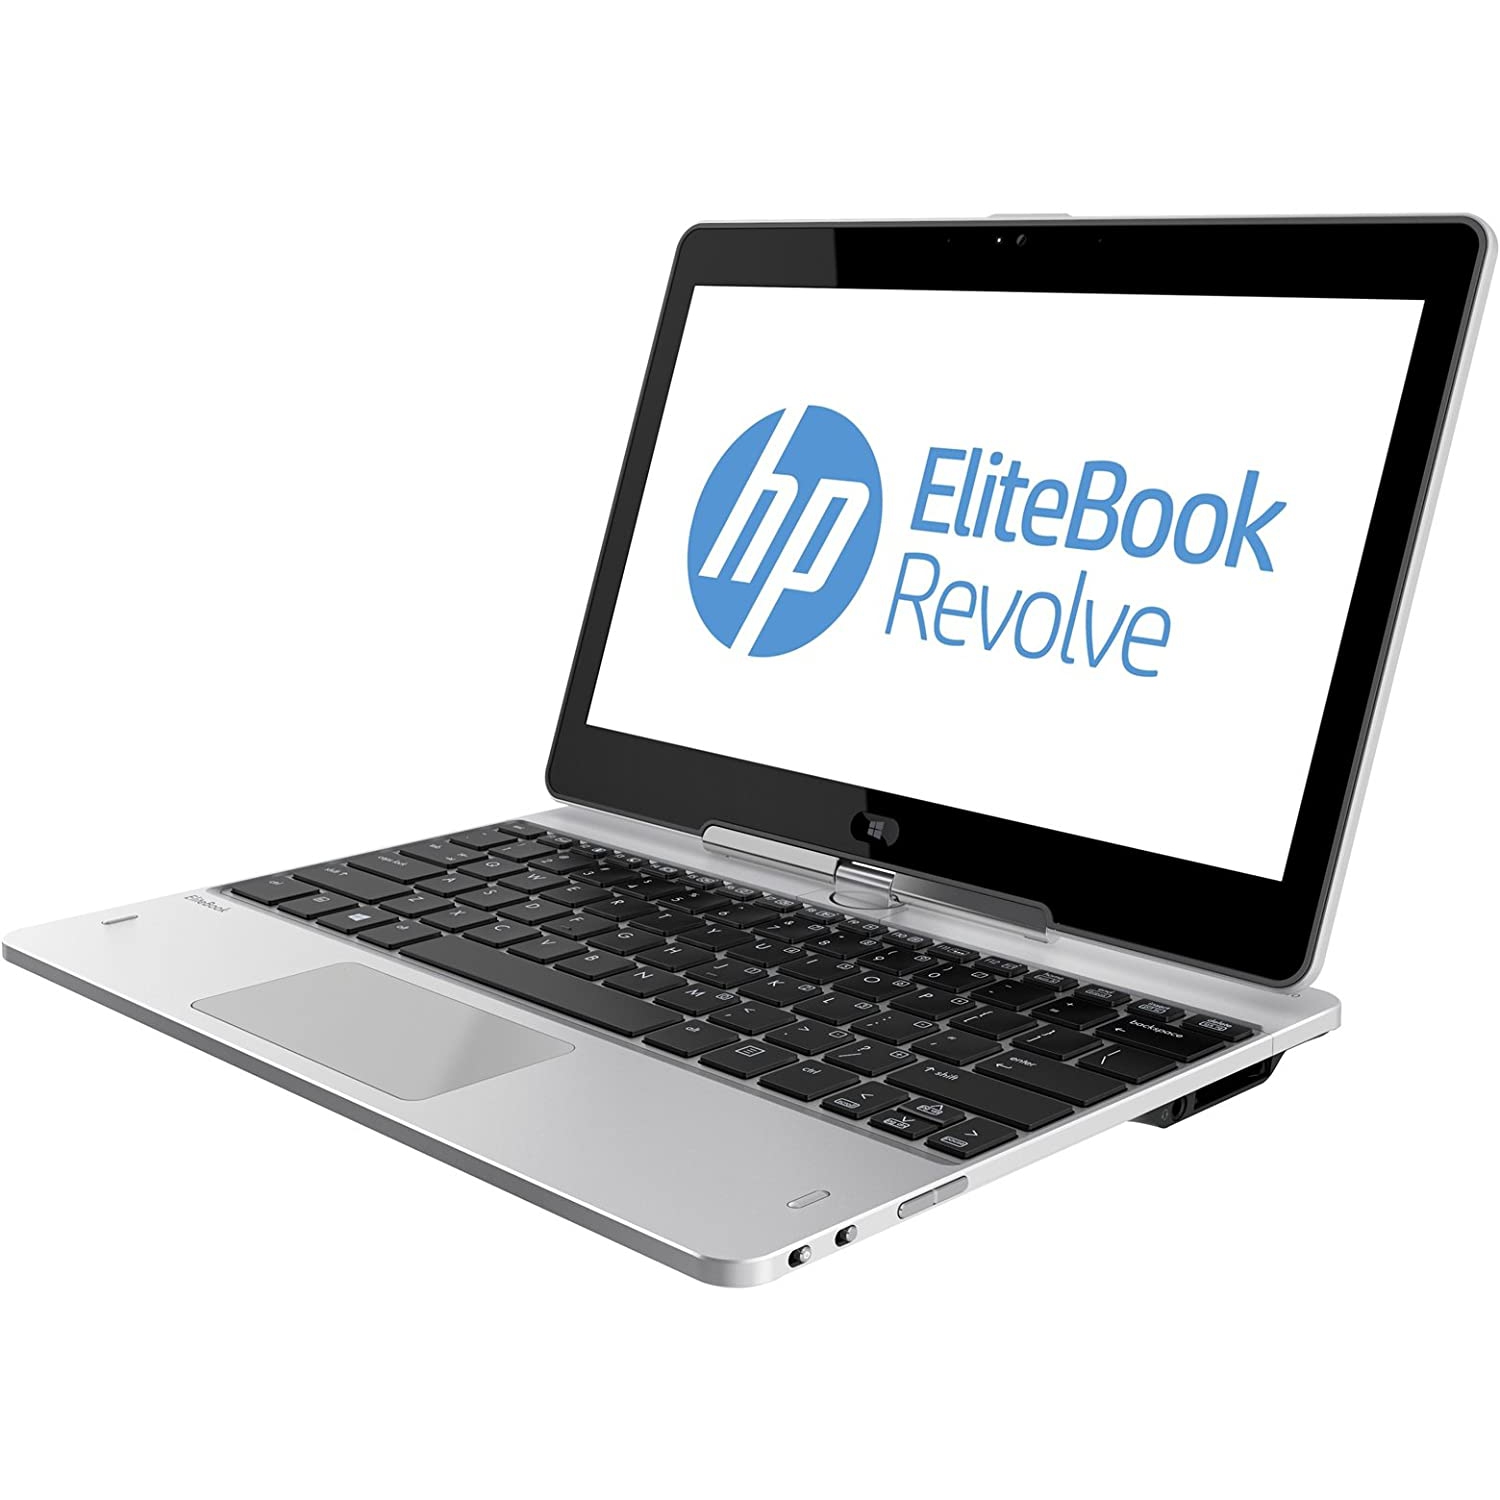 Refurbished (Good) - HP Revolve 810 G2 Tablet Laptop (Intel i5 4300U, 8GB Ram, 128GB SSD, Webcam, Win 10, 11.6" Touchscreen)